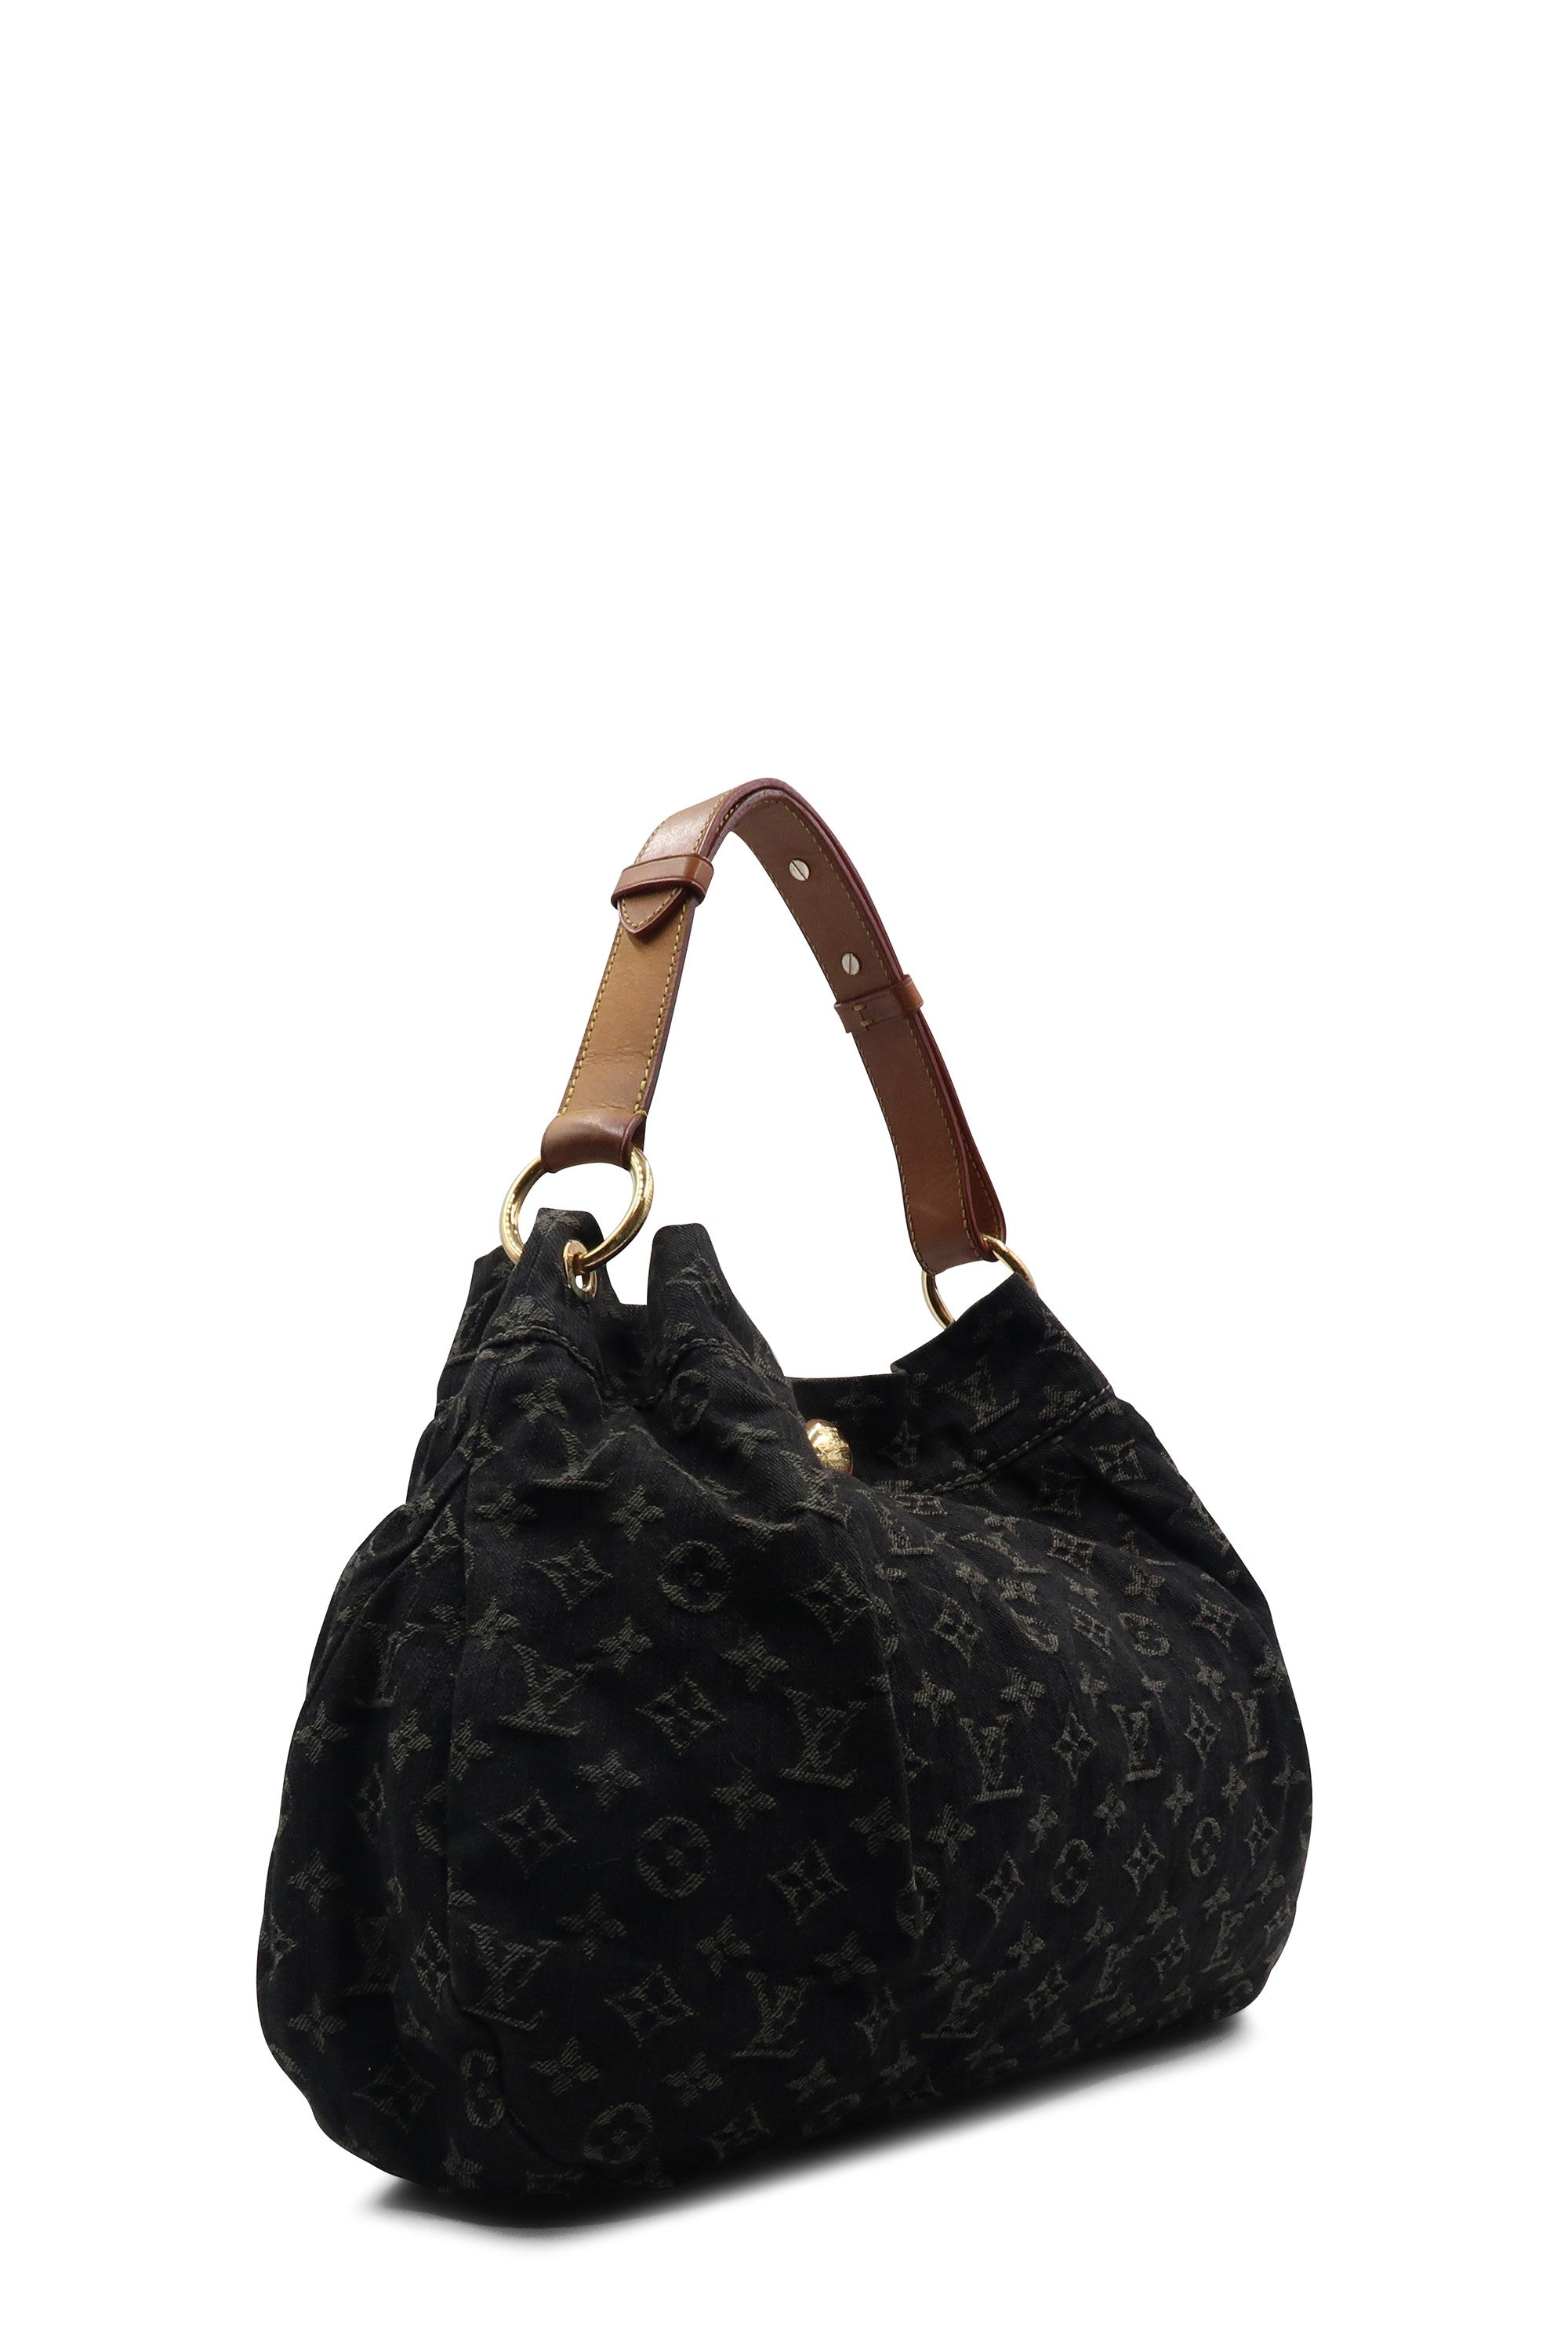 Louis Vuitton Monogram Denim Daily PM Shoulder Toy Hobo Bag Black Noir